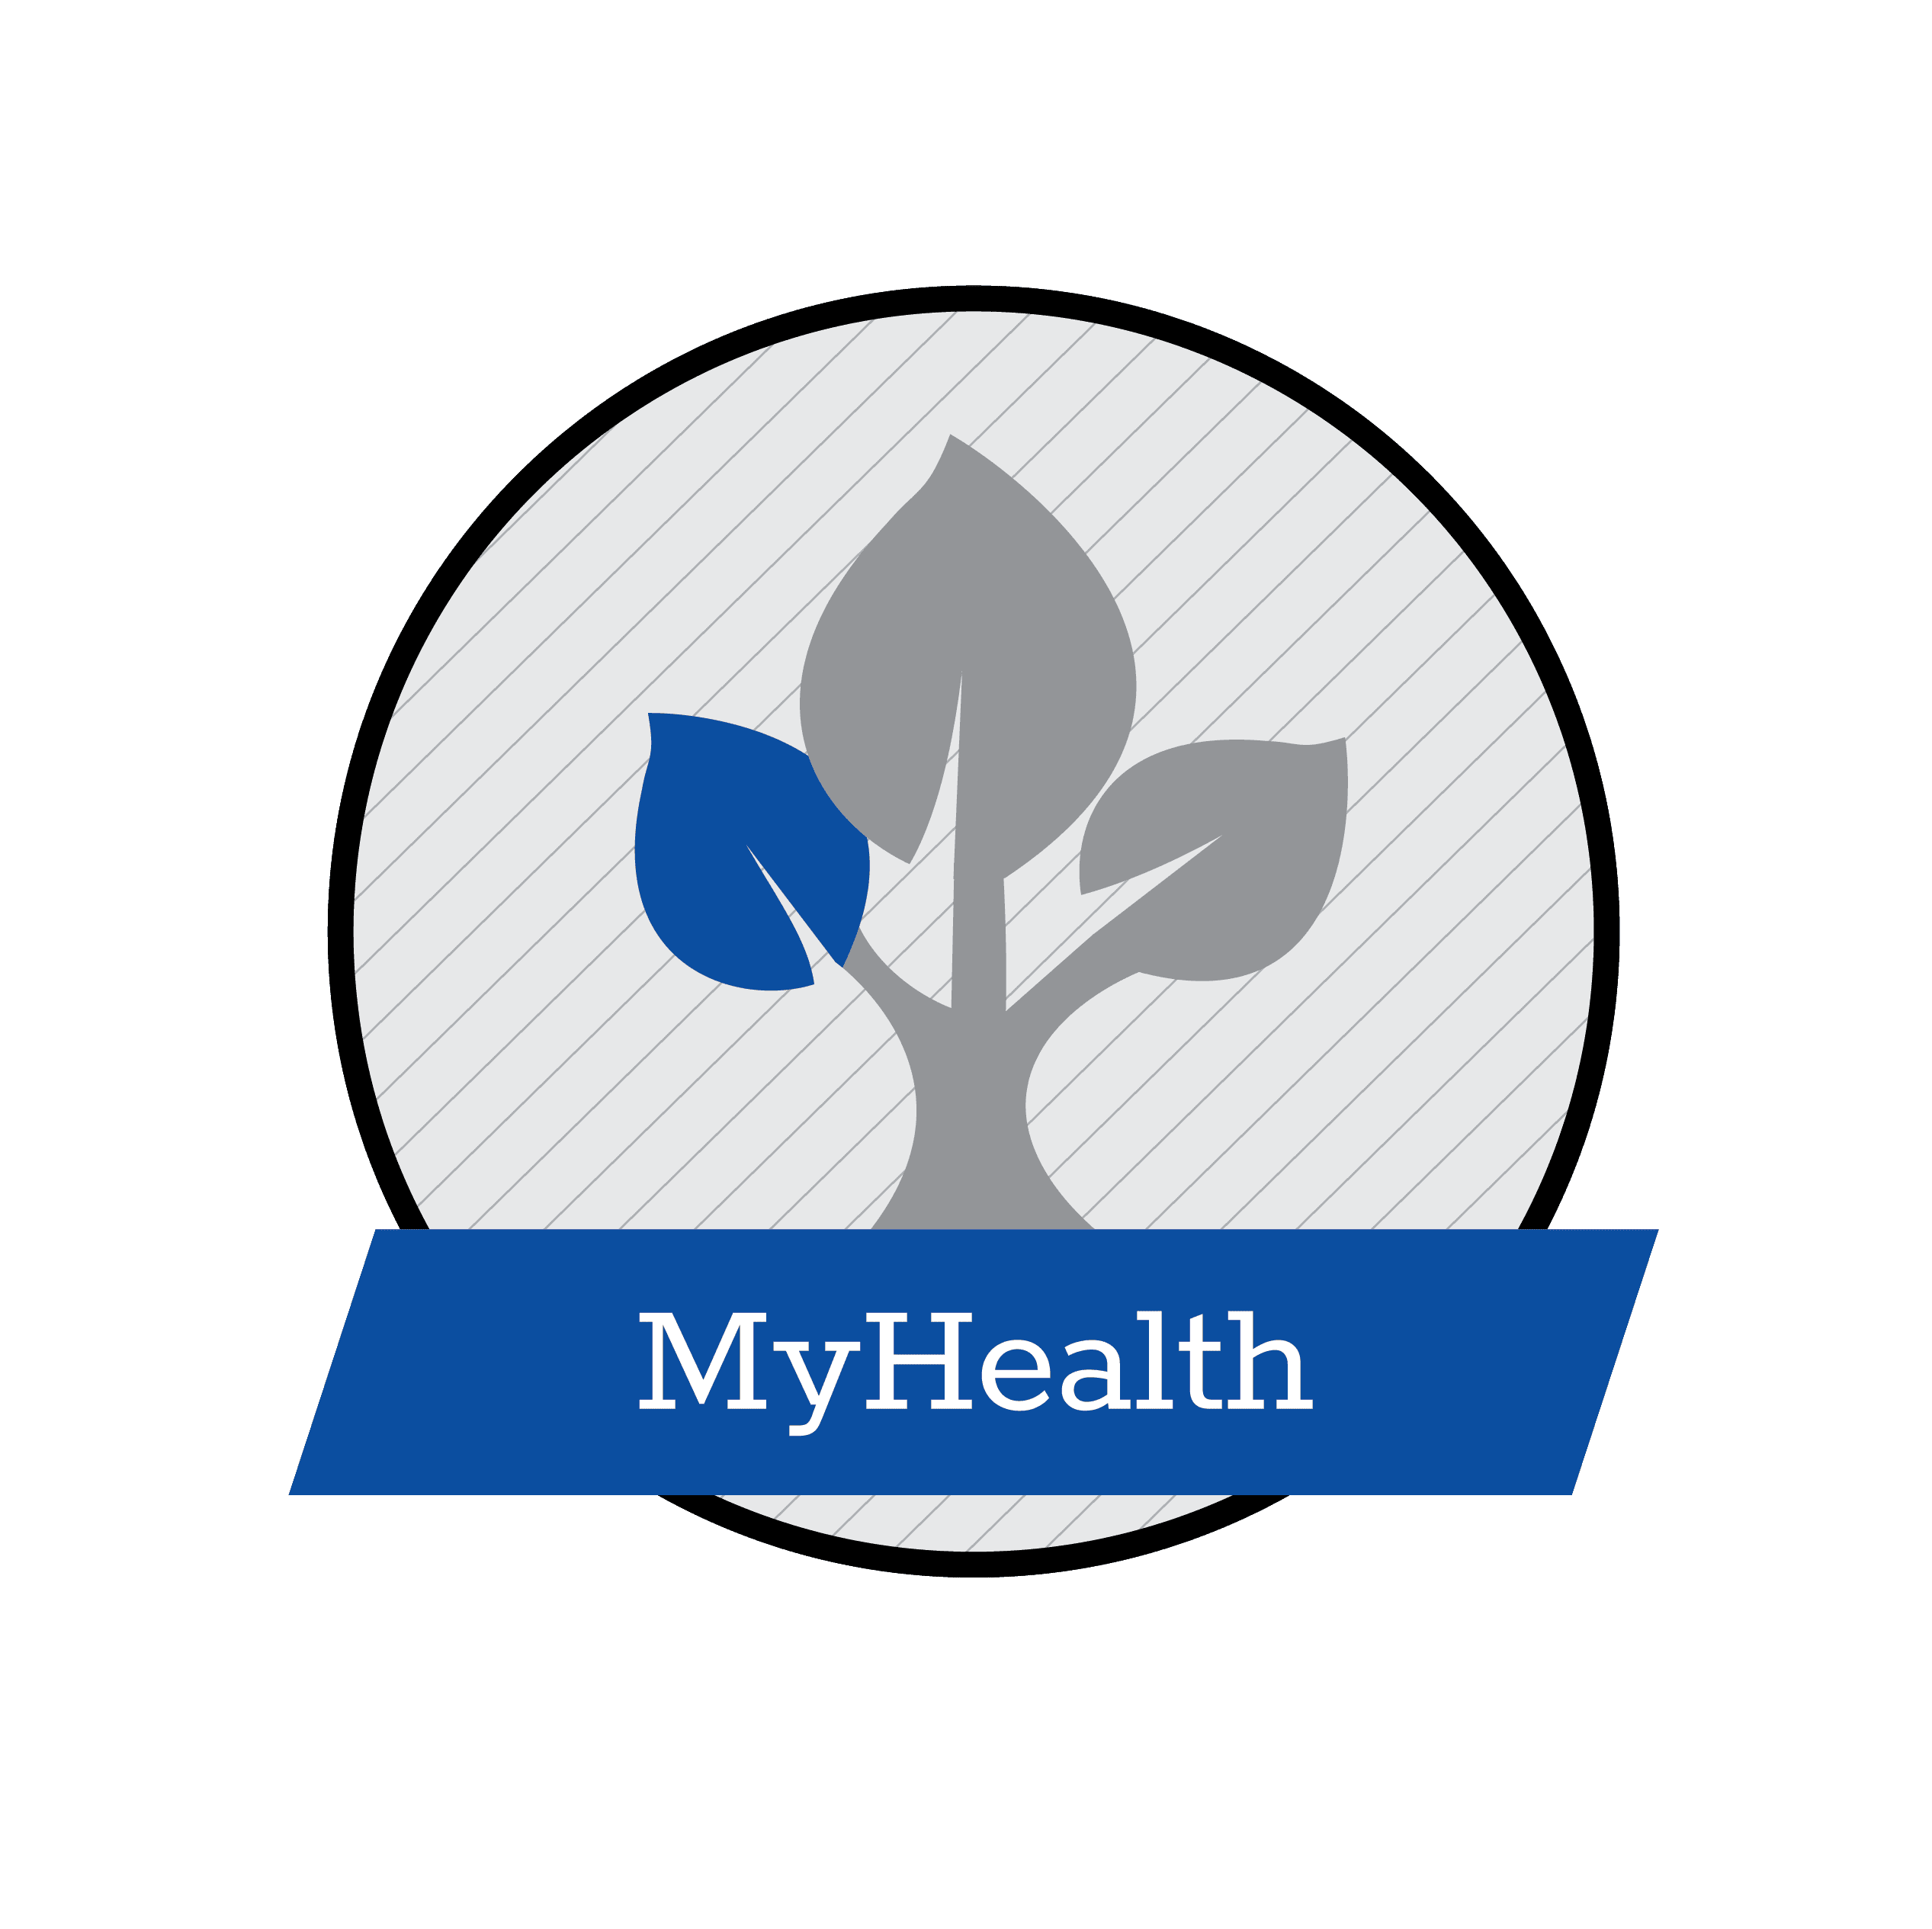  MyHealth logo 